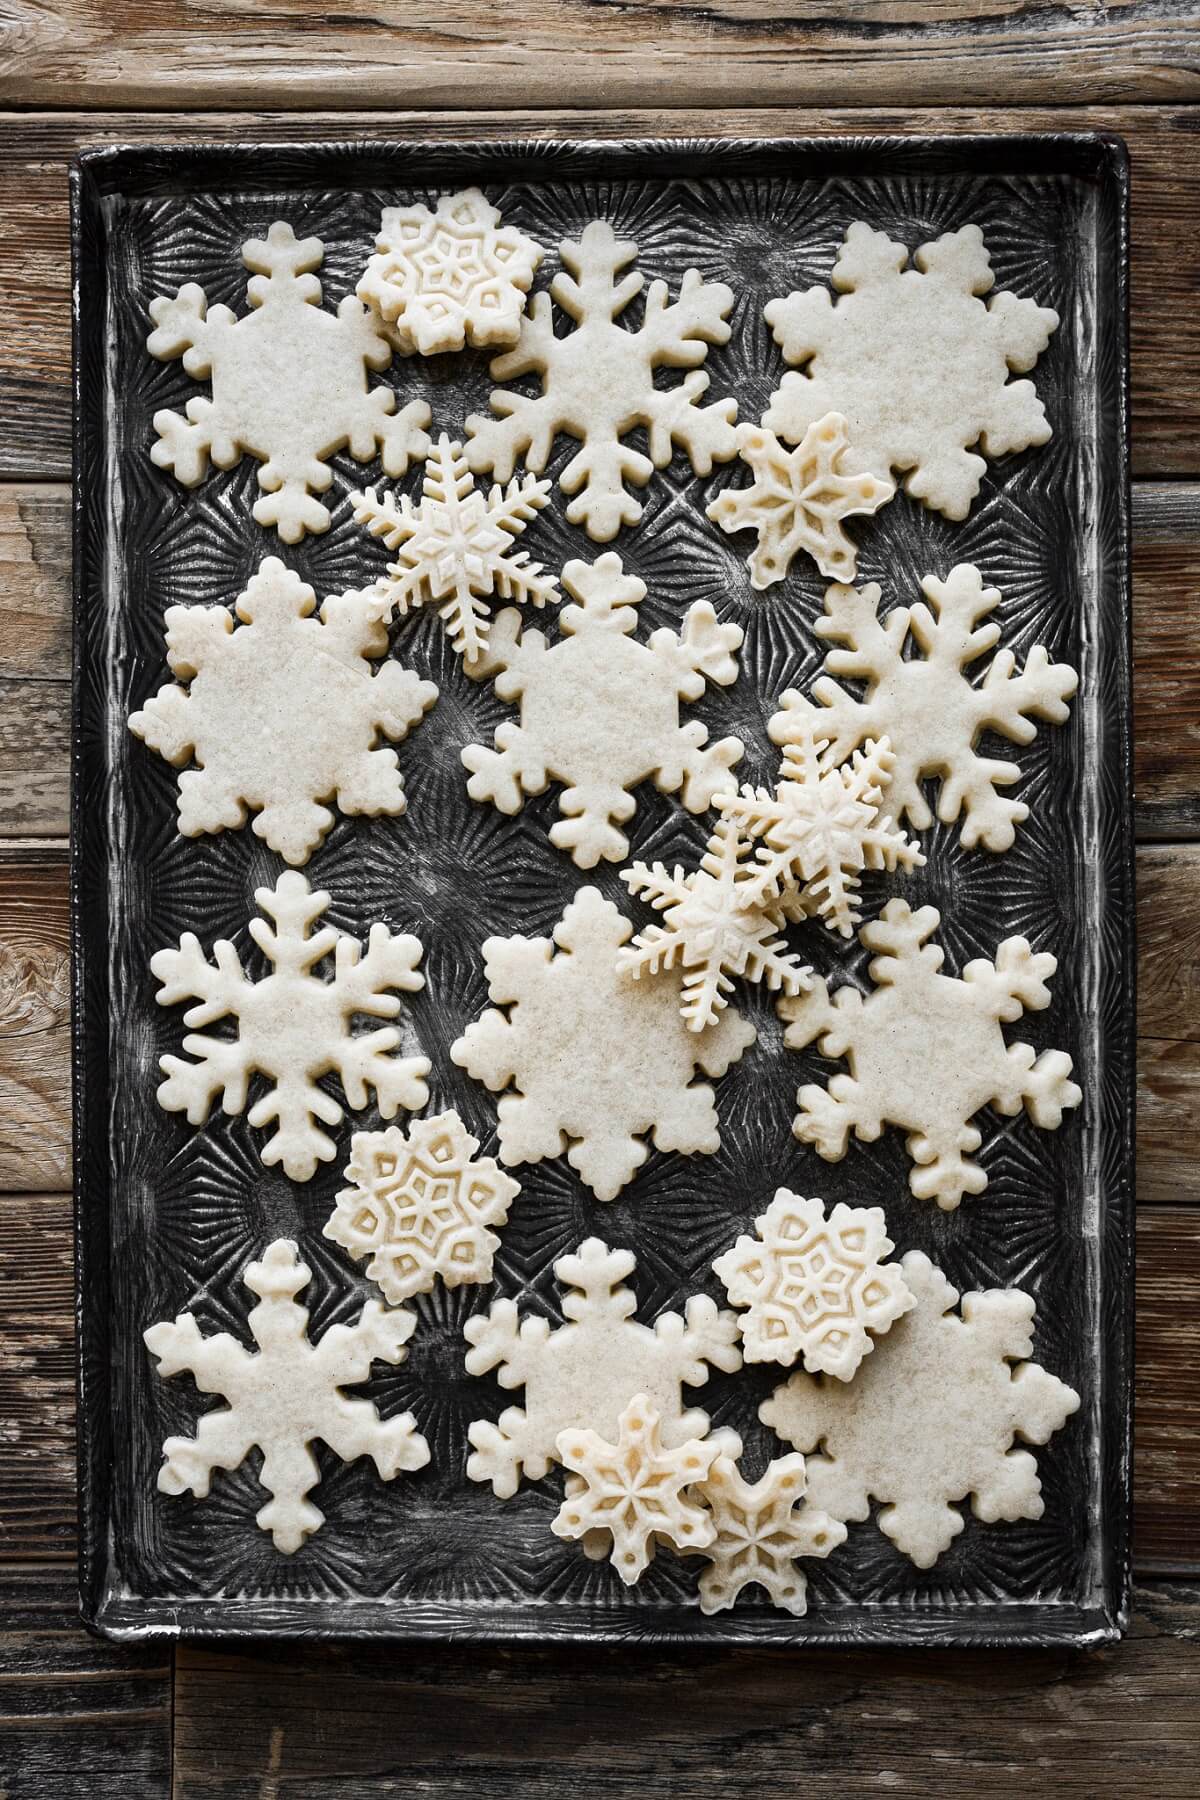 Snowflake cookies on a baking sheet.